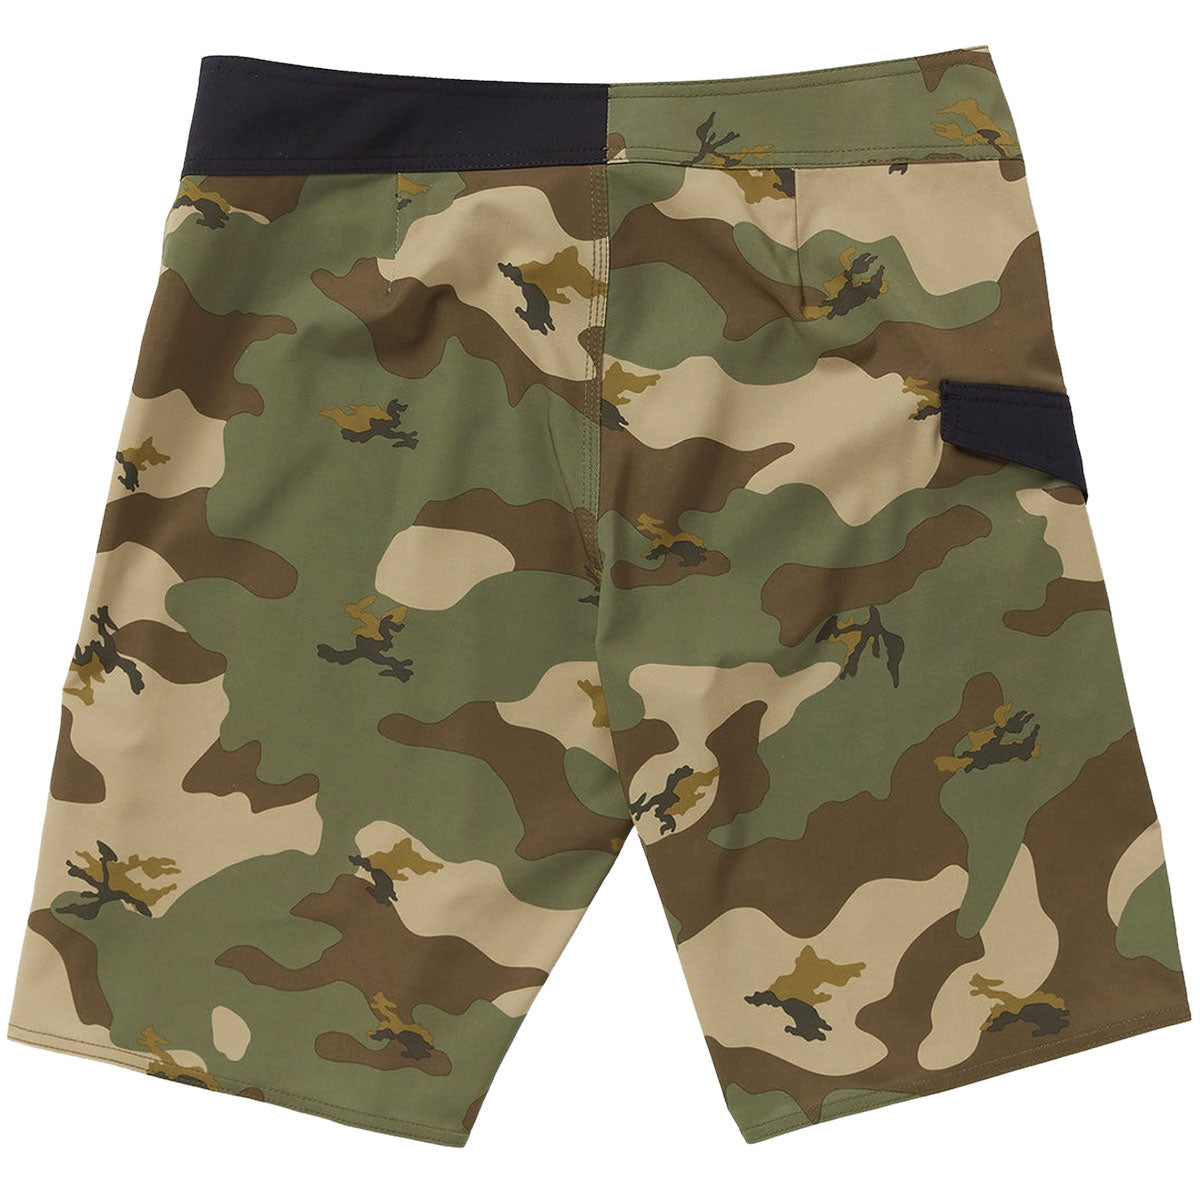 Volcom Lido Print Mod 20 Board Shorts - Camouflage image 2